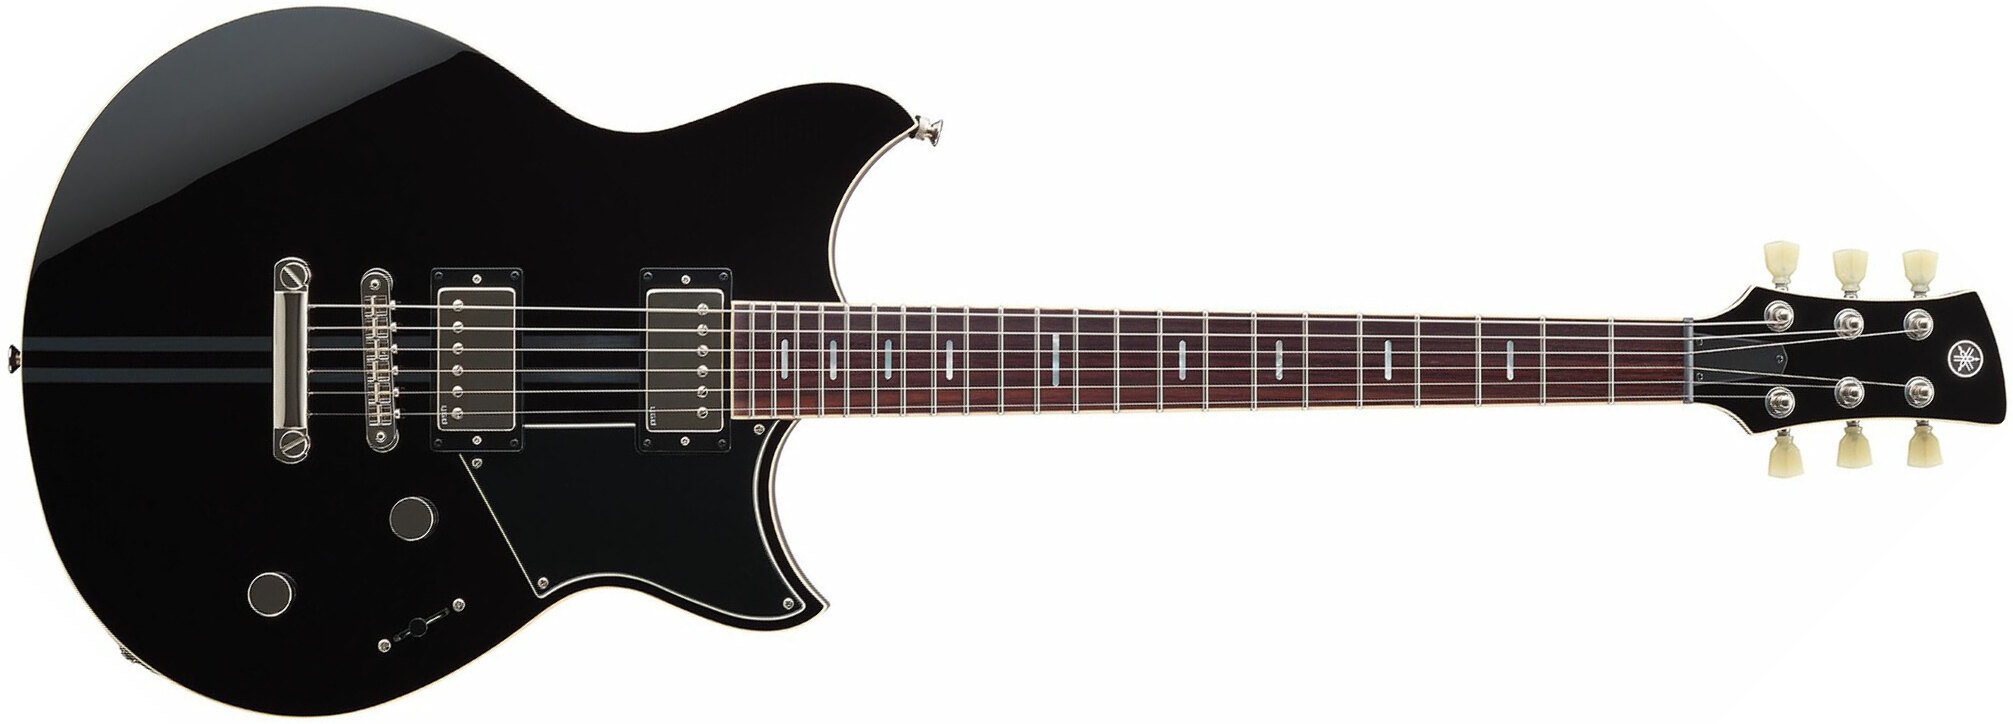 Yamaha Rss20 Revstar Standard Hh Ht Rw - Black - Double cut electric guitar - Main picture